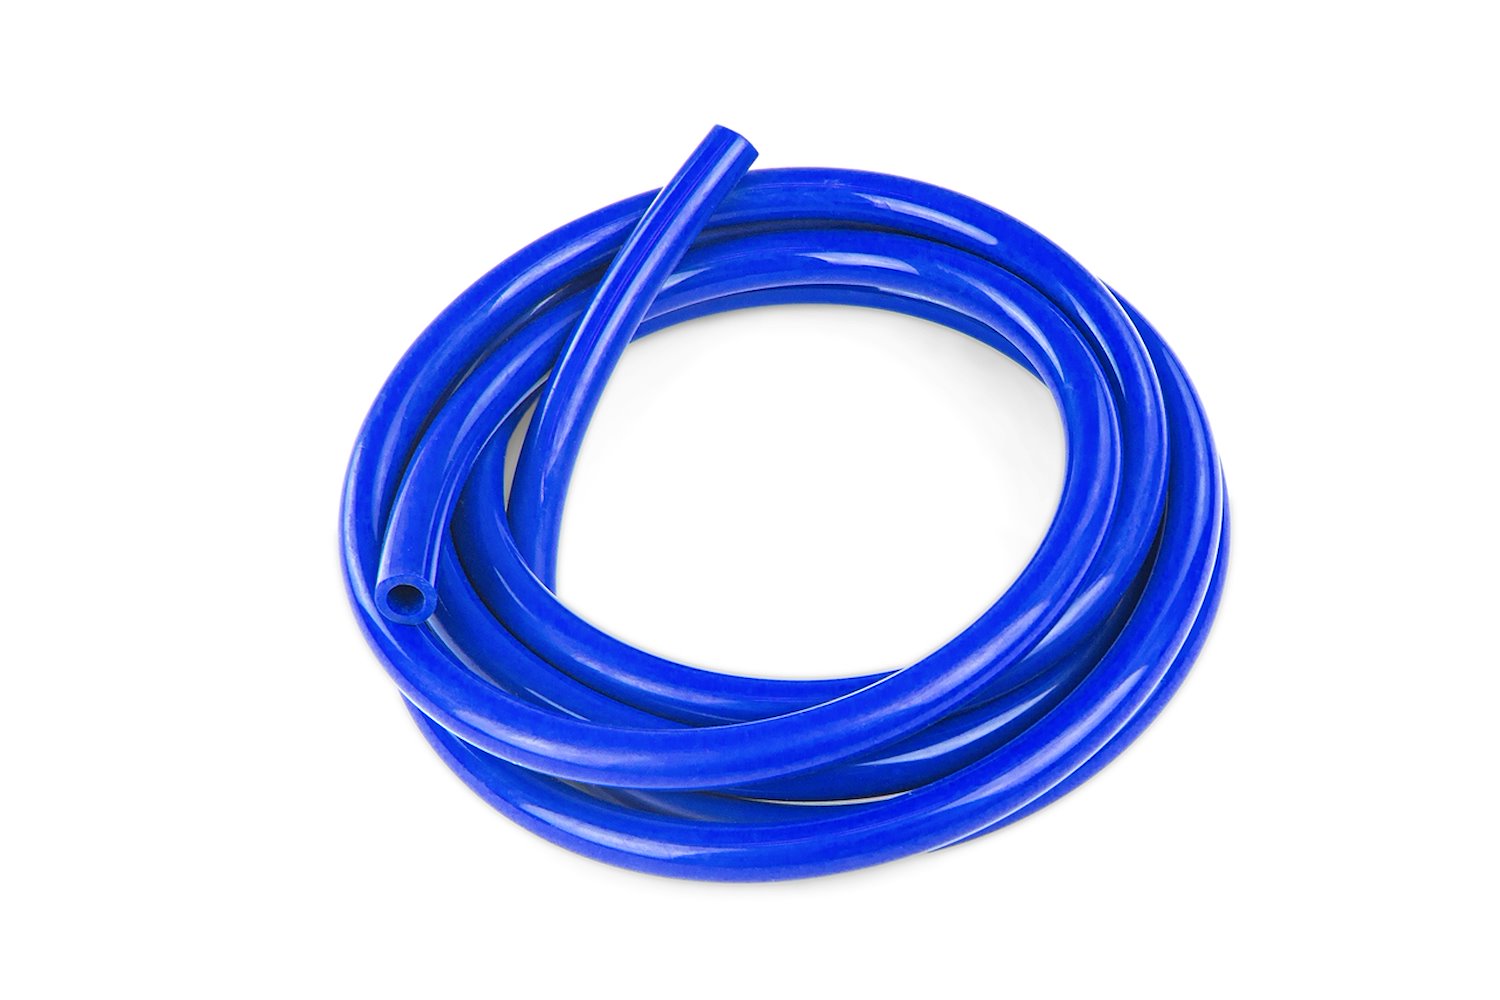 HTSVH3-BLUEx5 High-Temperature Silicone Vacuum Hose Tubing, 1/8 in. ID, 5 ft. Roll, Blue